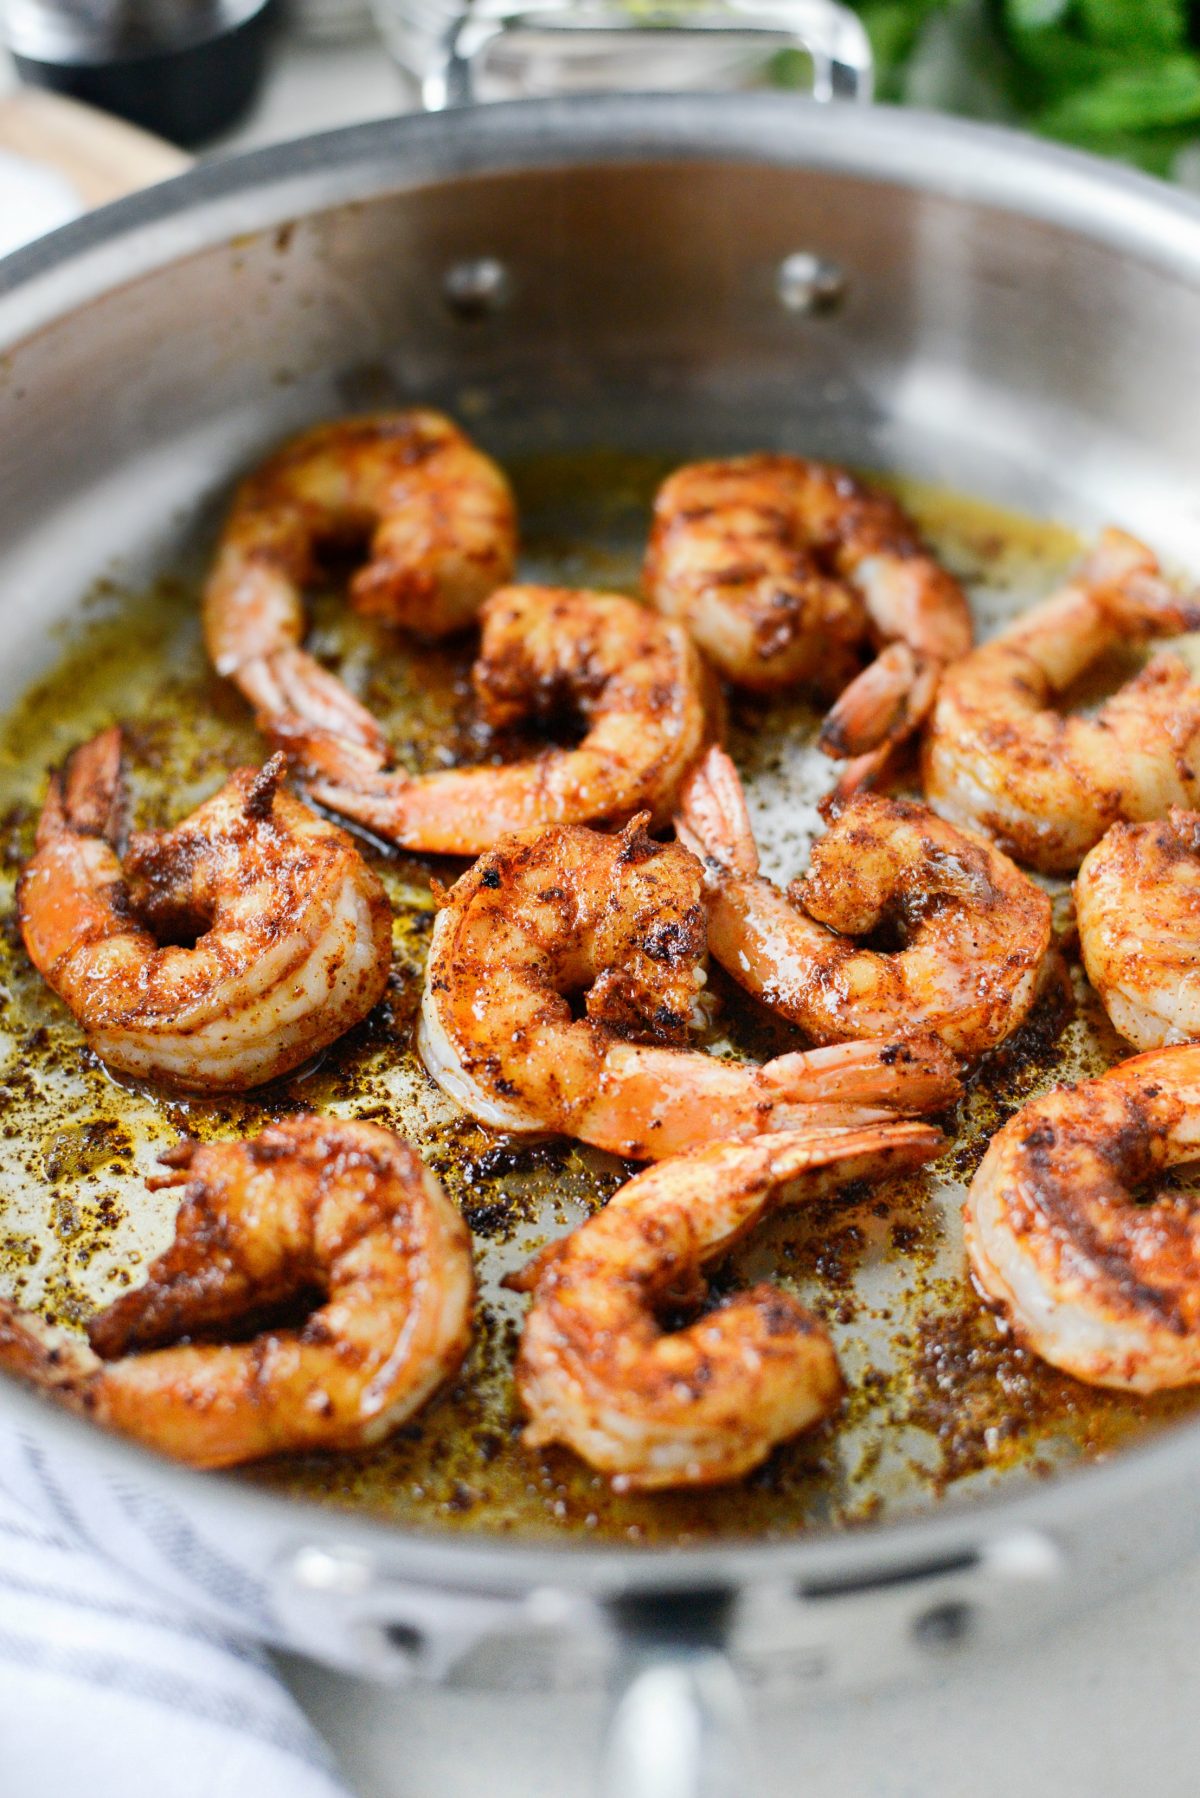 cook shrimp in oil until opaque 